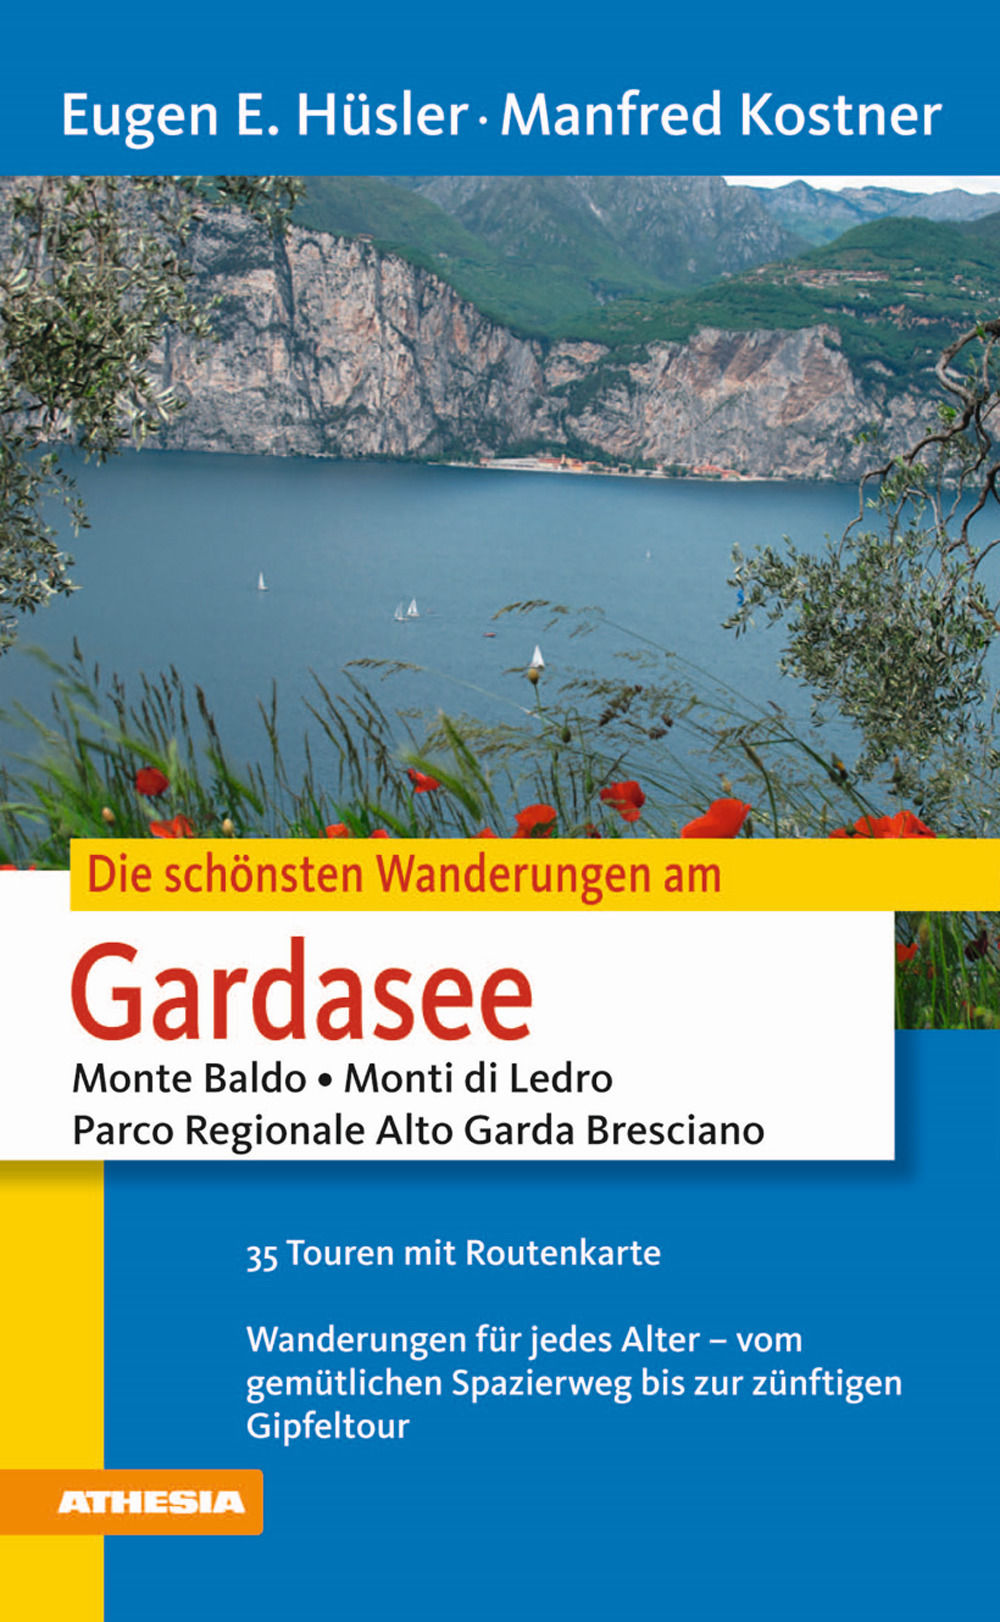 Die schönsten Wanderungen. Gardasee monte Baldo, monti di Ledro, parco regionale, Alto Garda bresciano